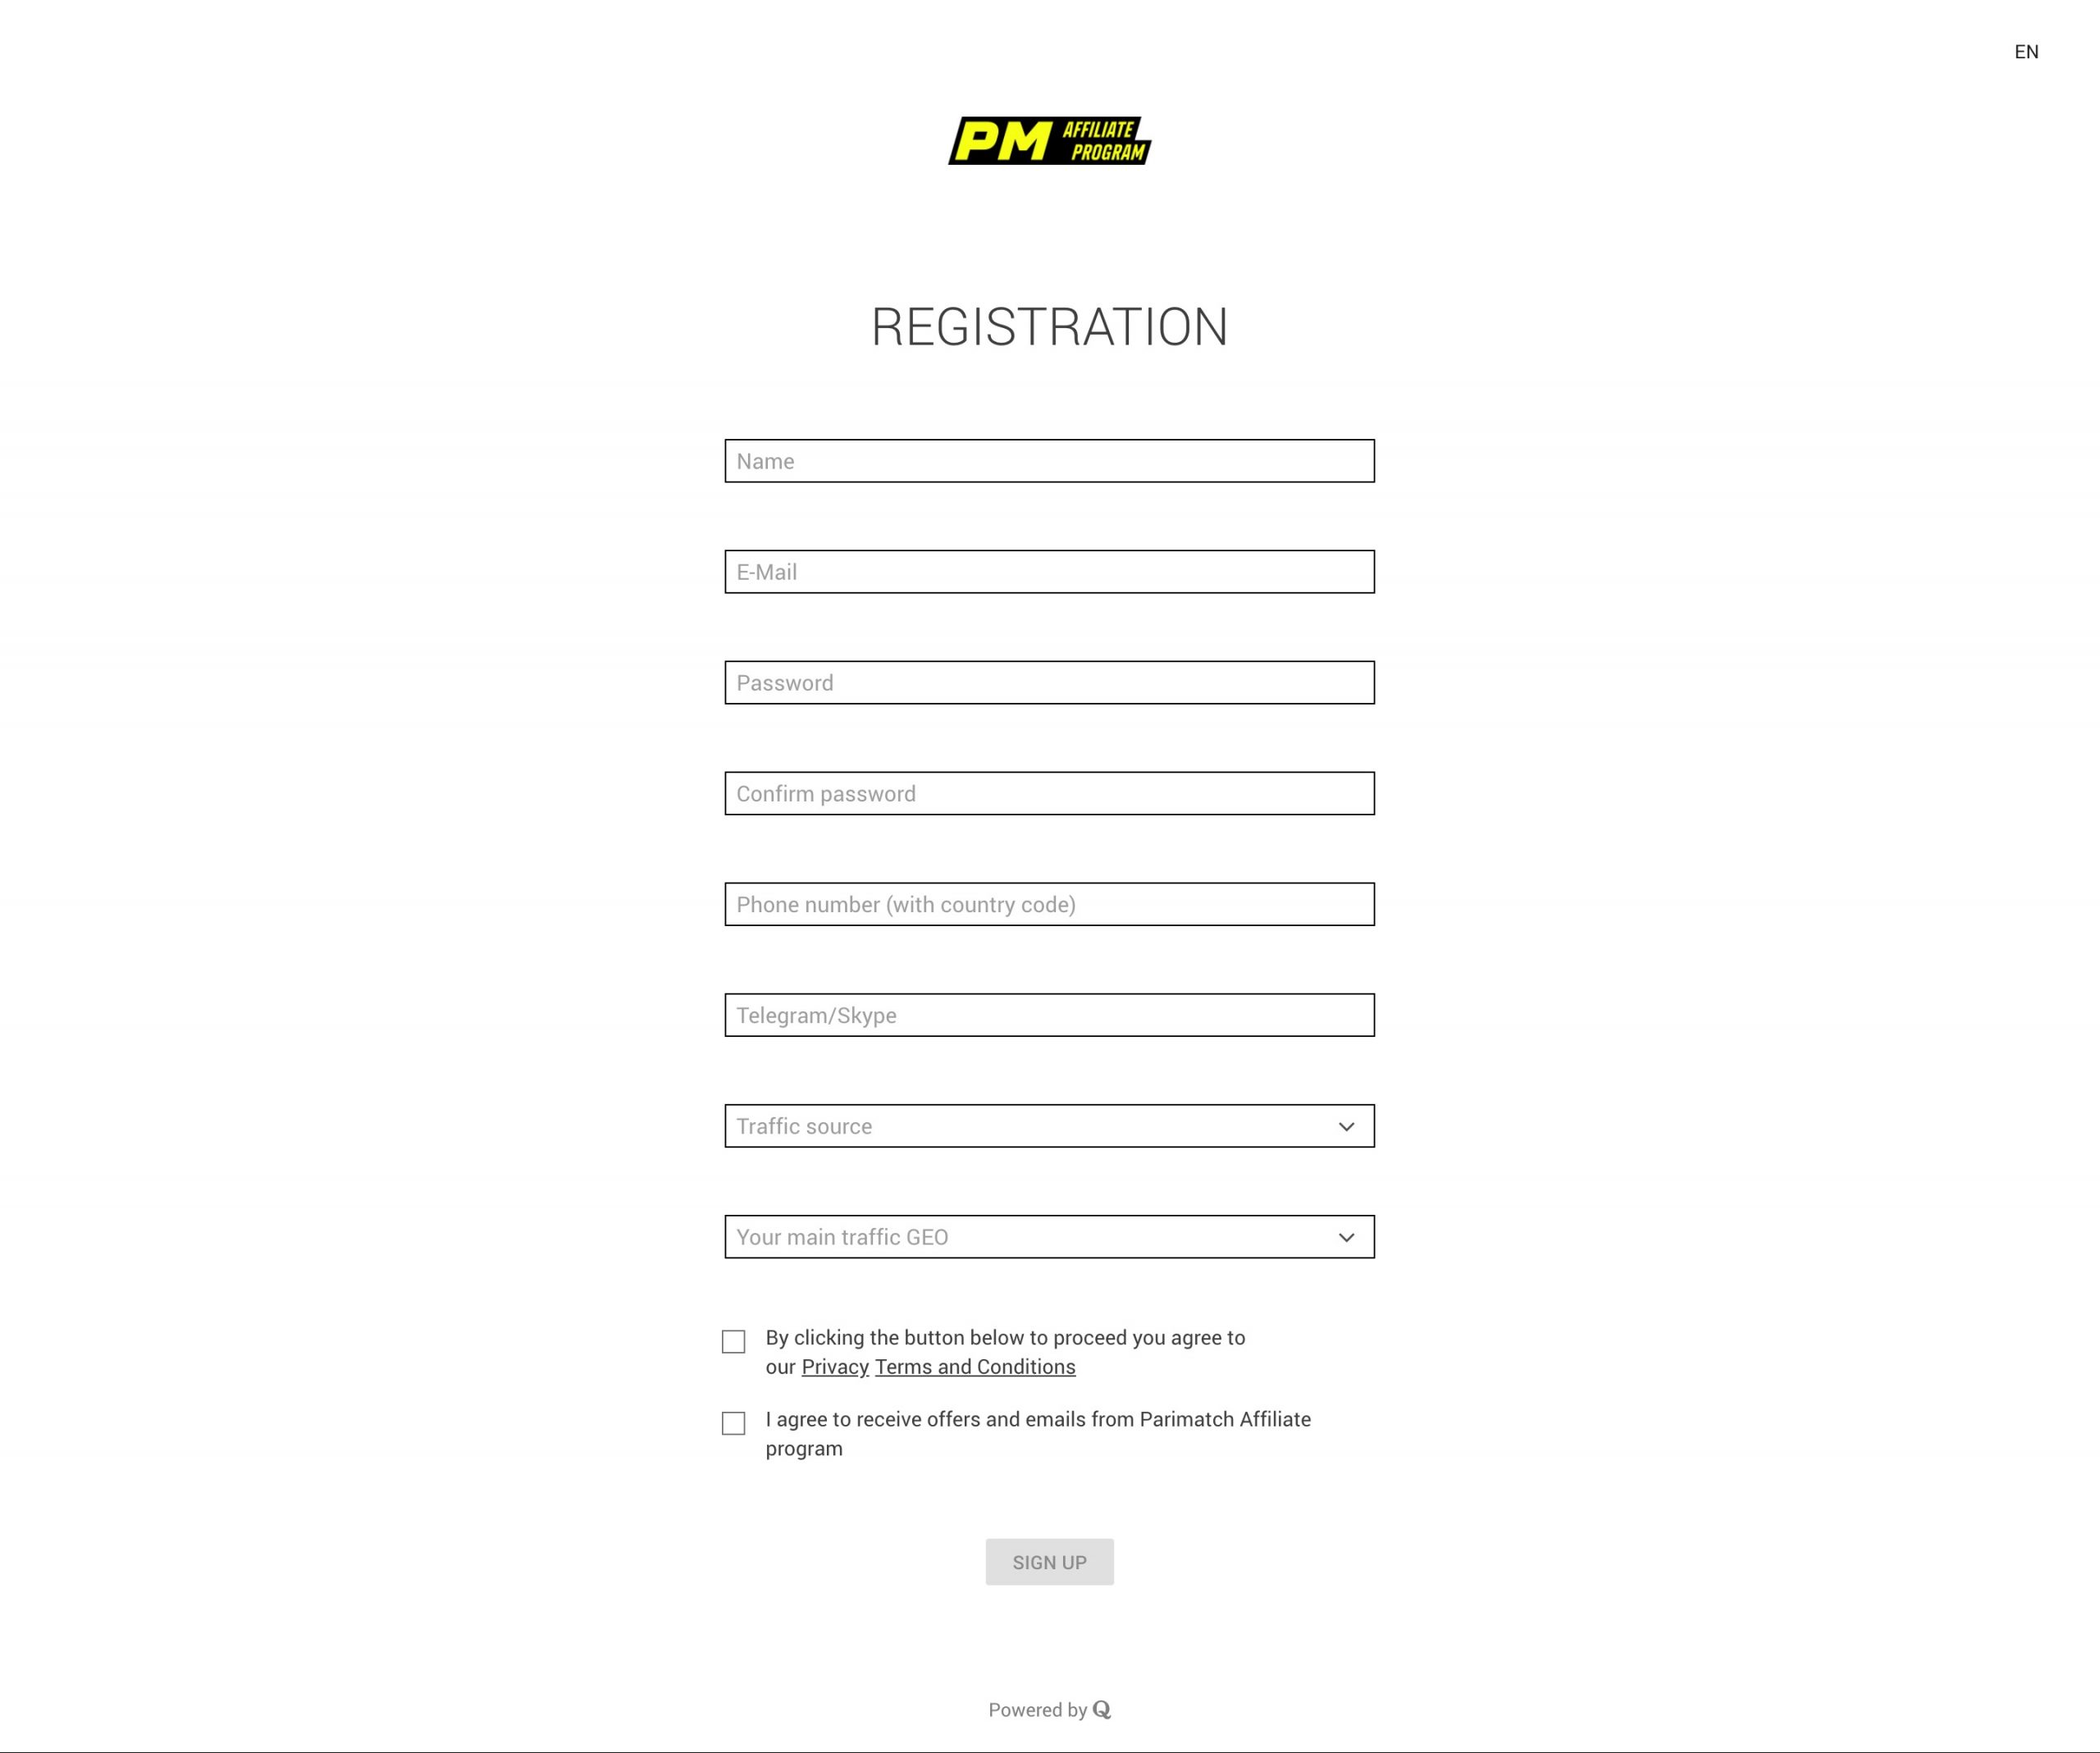 Registration of PMaffiliate Program